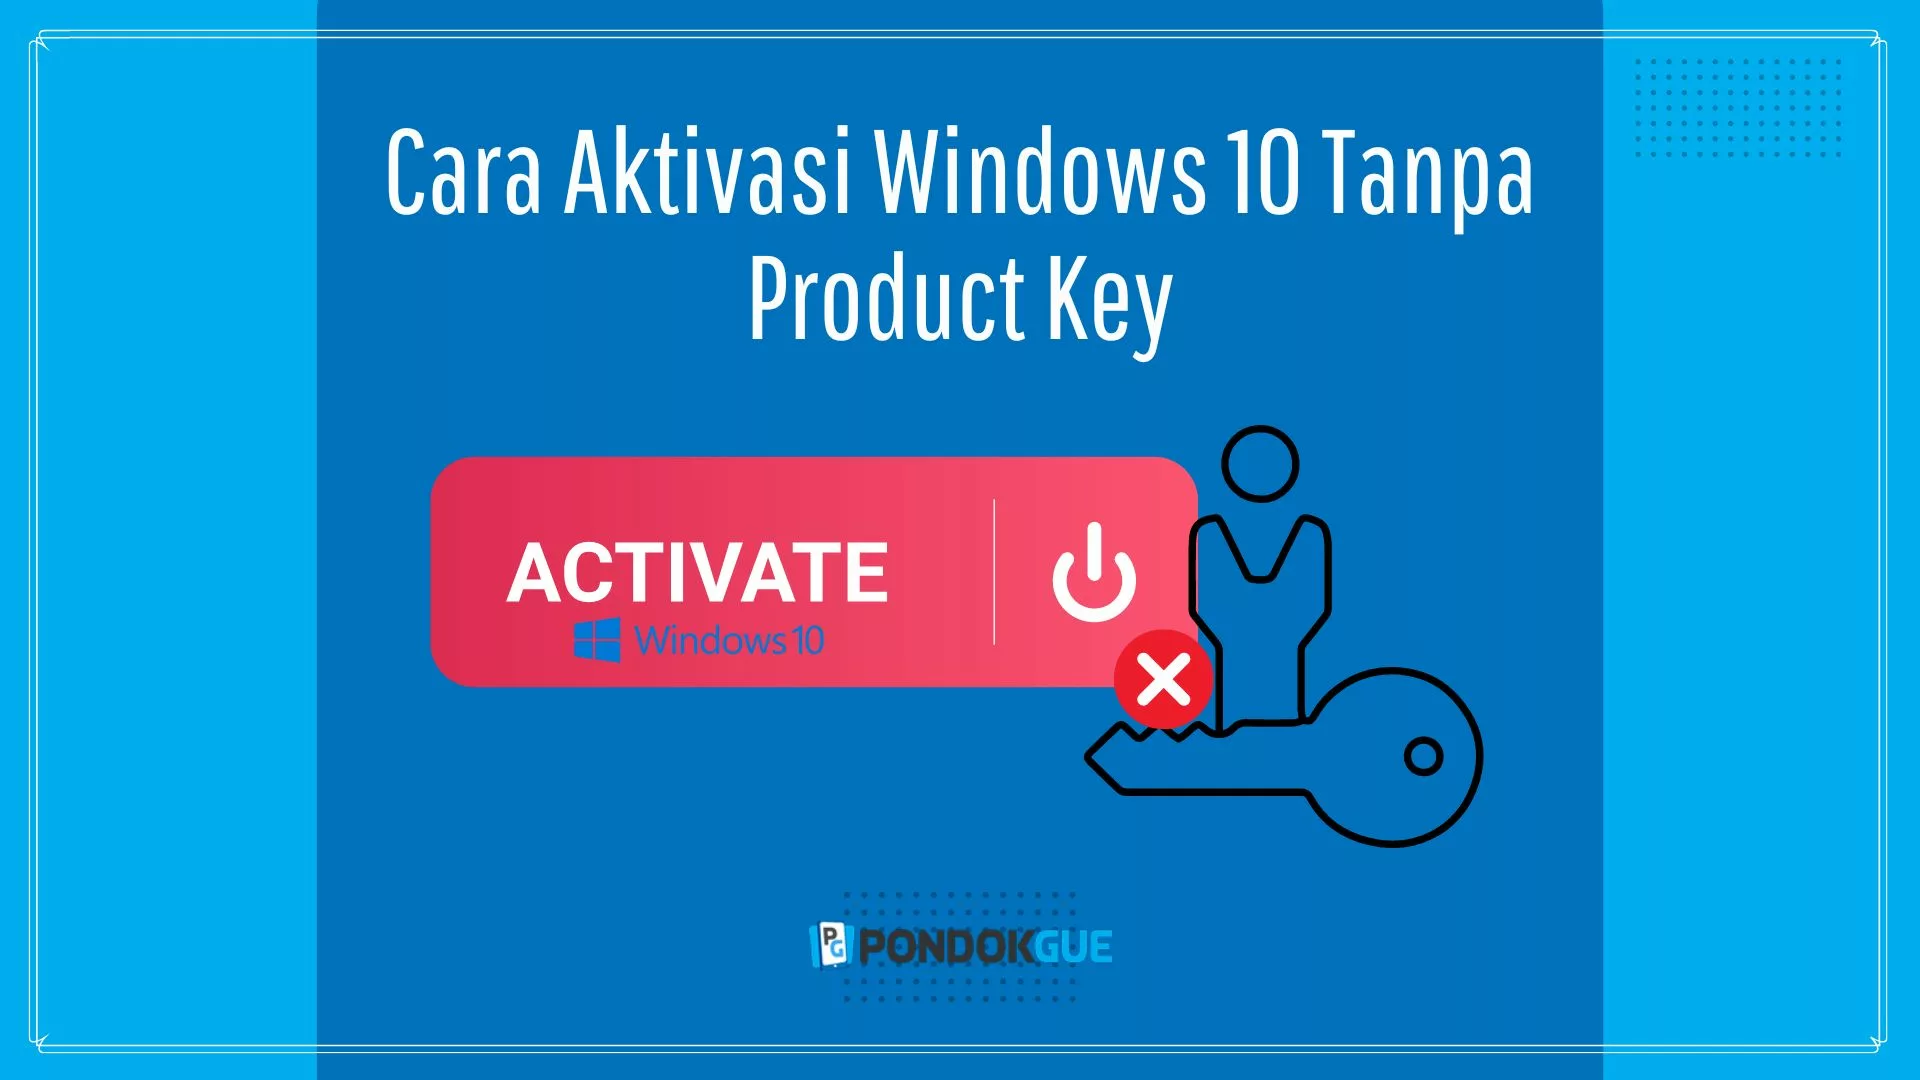 Cara Aktivasi Windows 10 Tanpa Product Key - Pondokgue.com